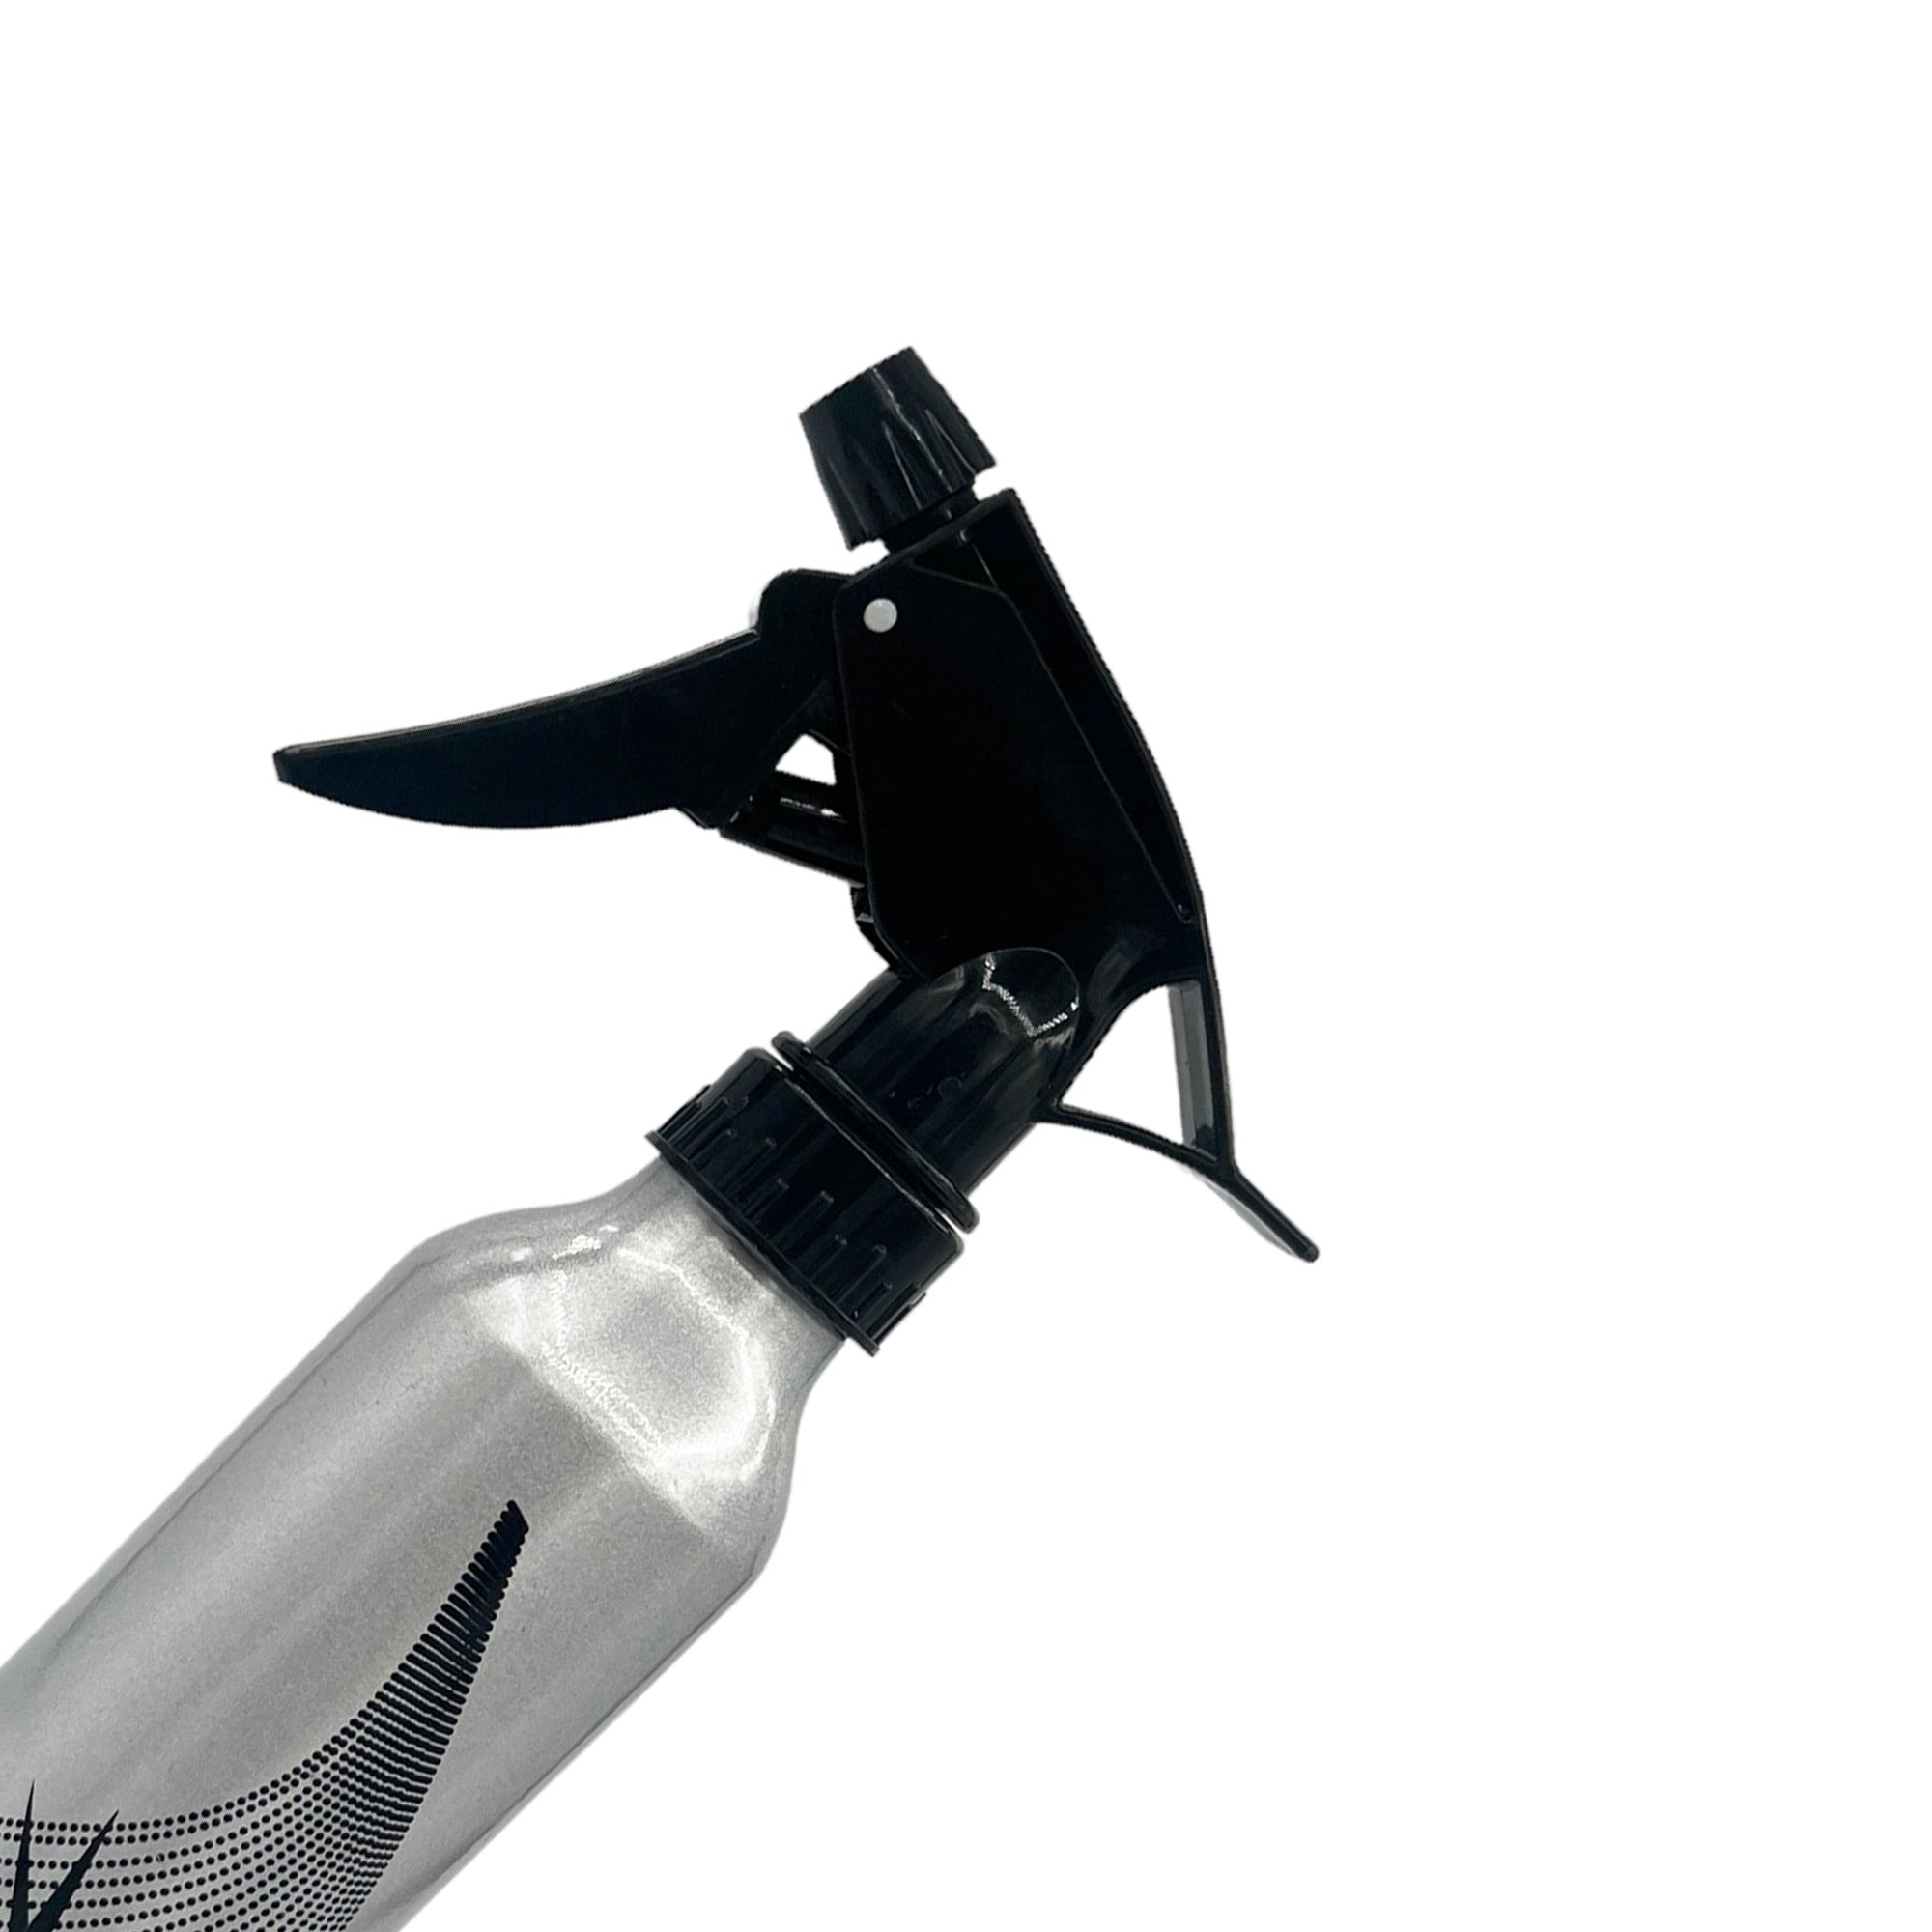 Eson - Water Spray Bottle 250ml Metallic Empty Refillable Extreme Mist Sprayer (Silver)